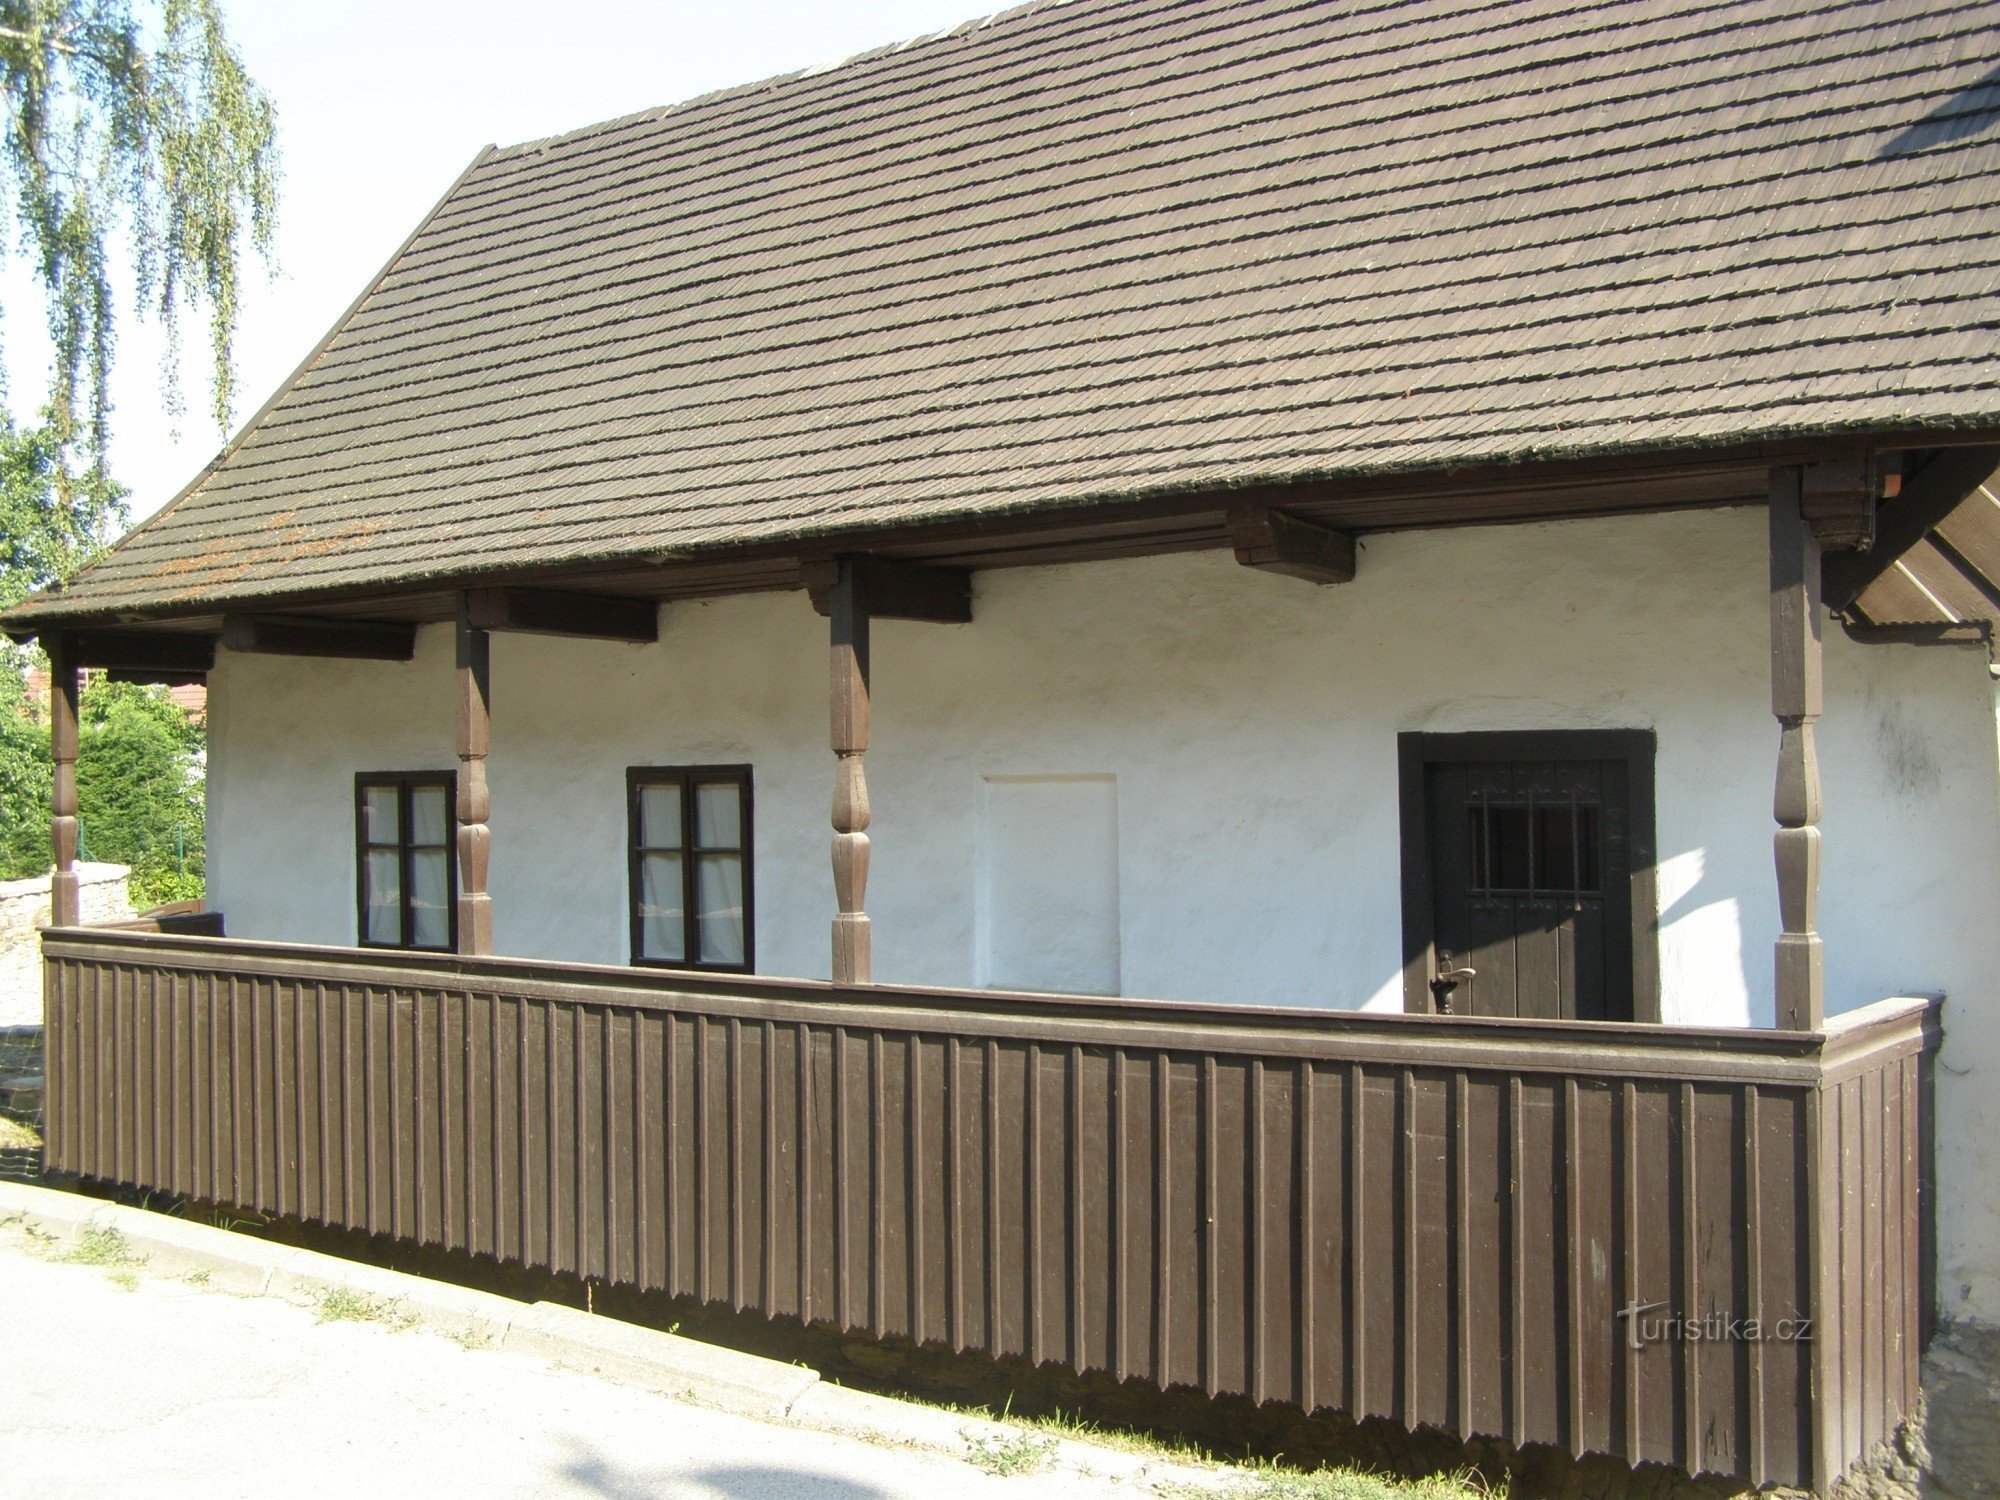 Dobruška - FLVěkin (Heka) syntymäpaikka